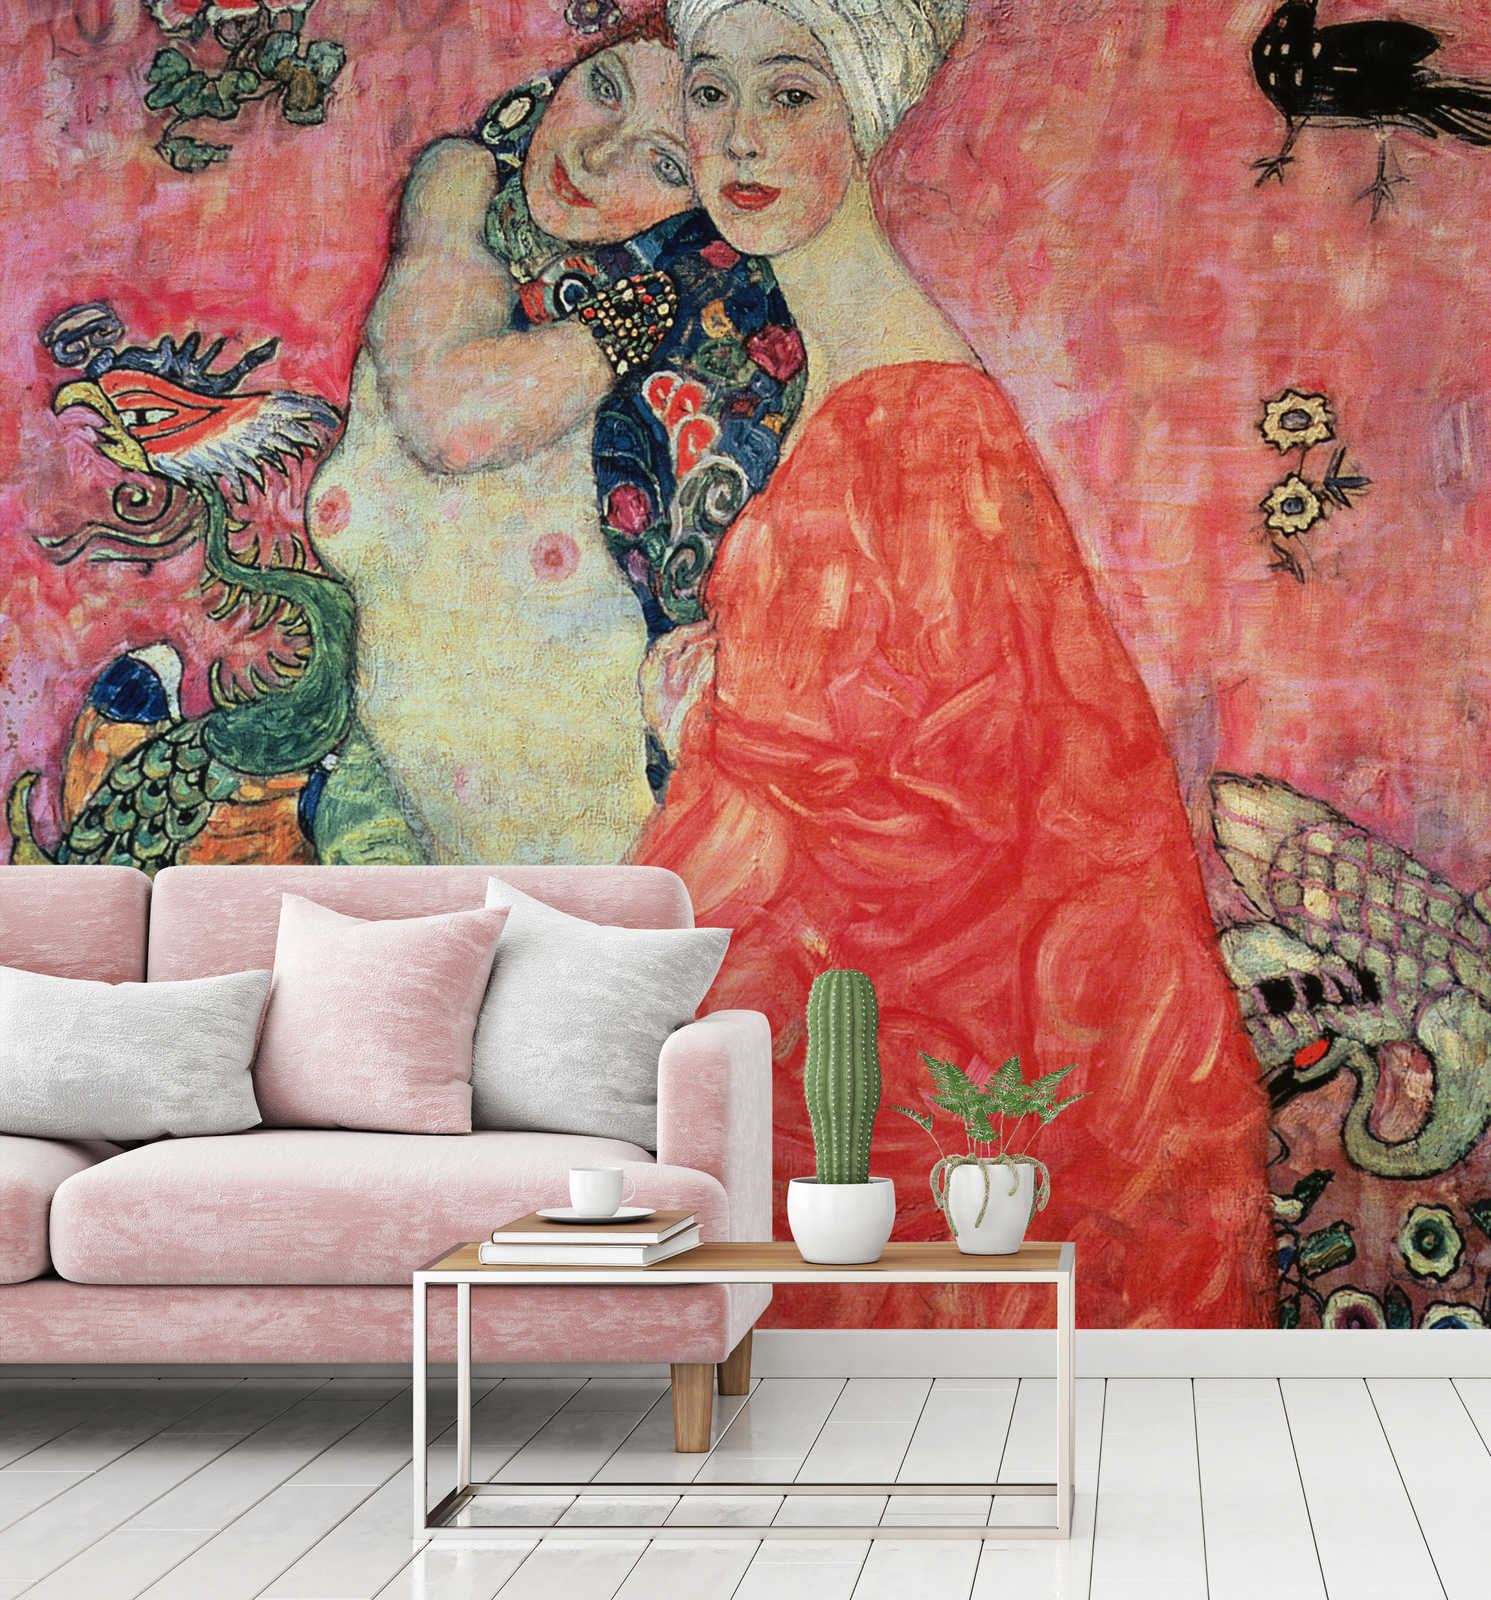             Photo wallpaper "The girlfriends" by Gustav Klimt
        